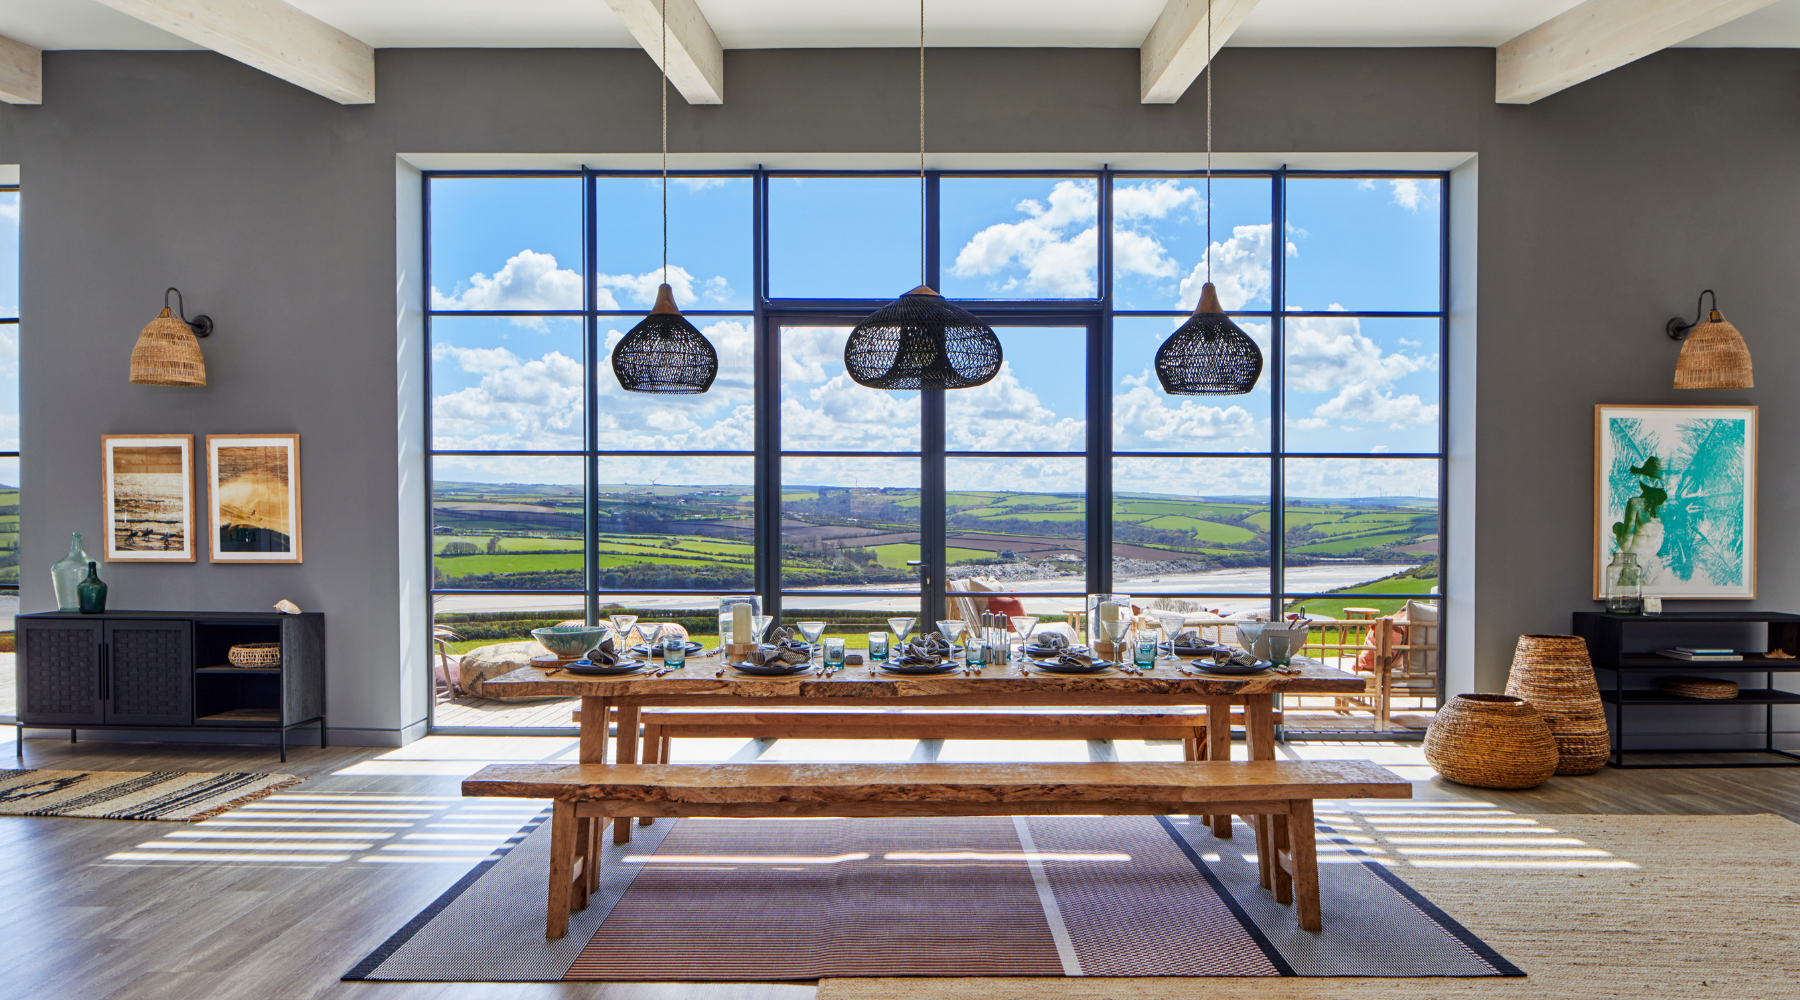 Omaze Million Pound House Draw Cornwall Dining Room 